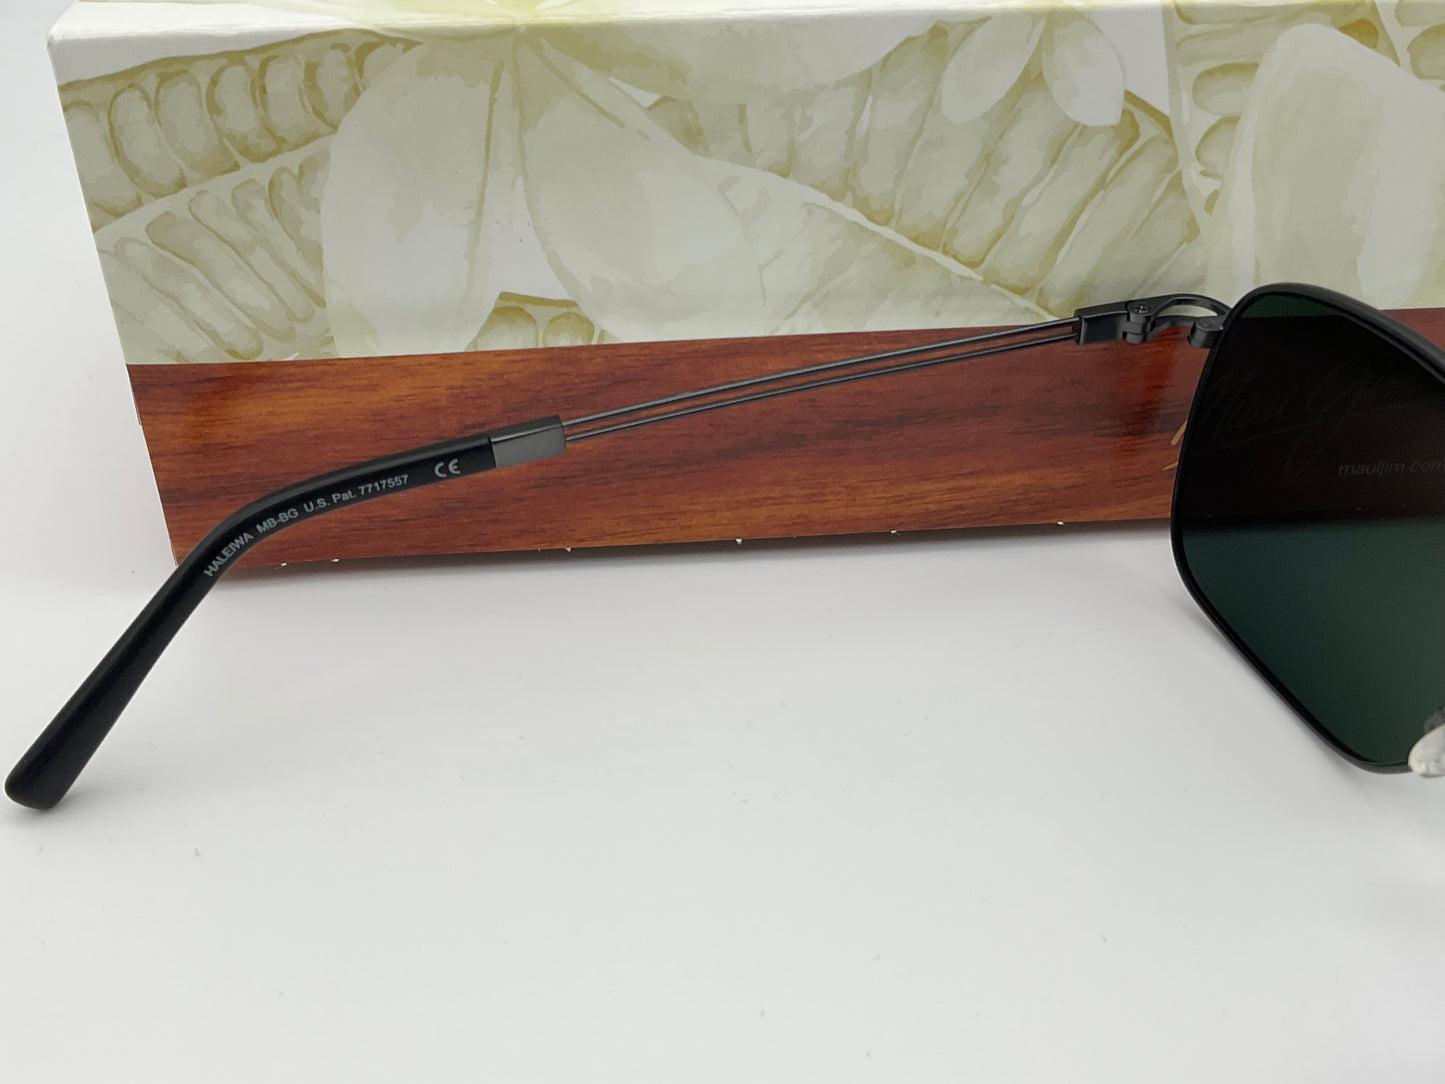 Maui Jim Haleiwa 56mm 328-02D Gunmetal Neutral Grey Polarized Sunglasses